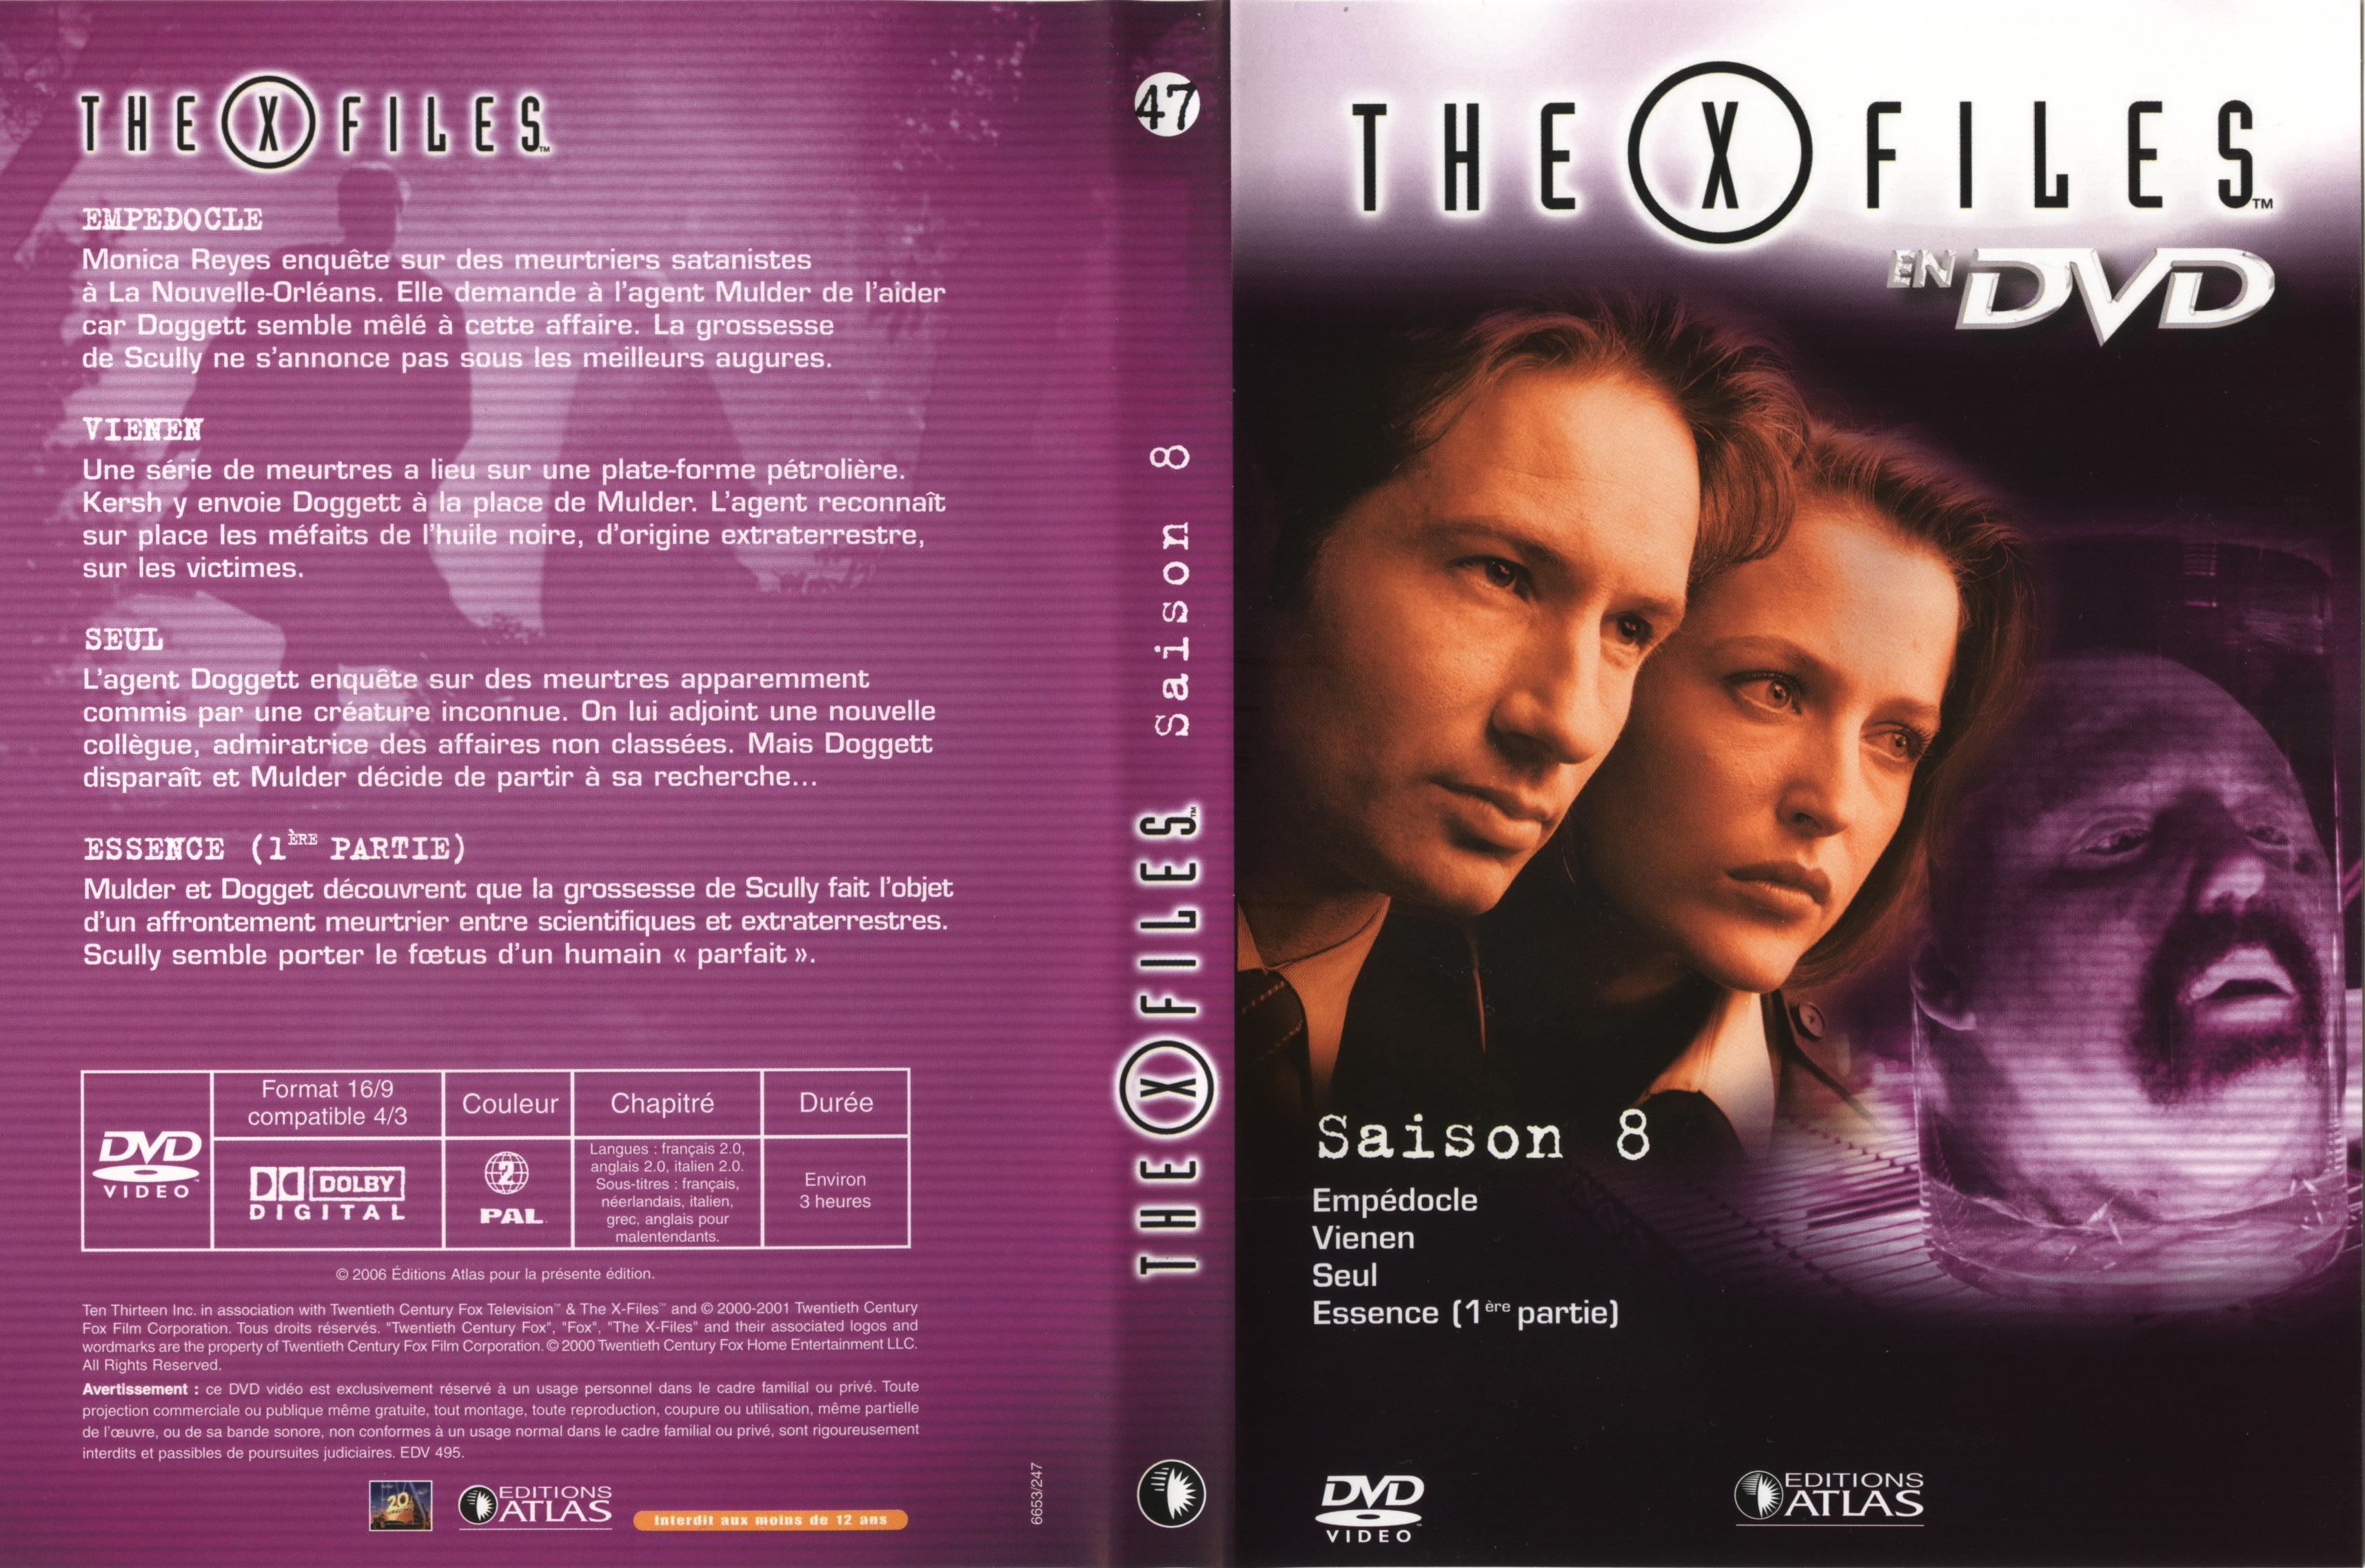 Jaquette DVD X Files saison 8 DVD 47